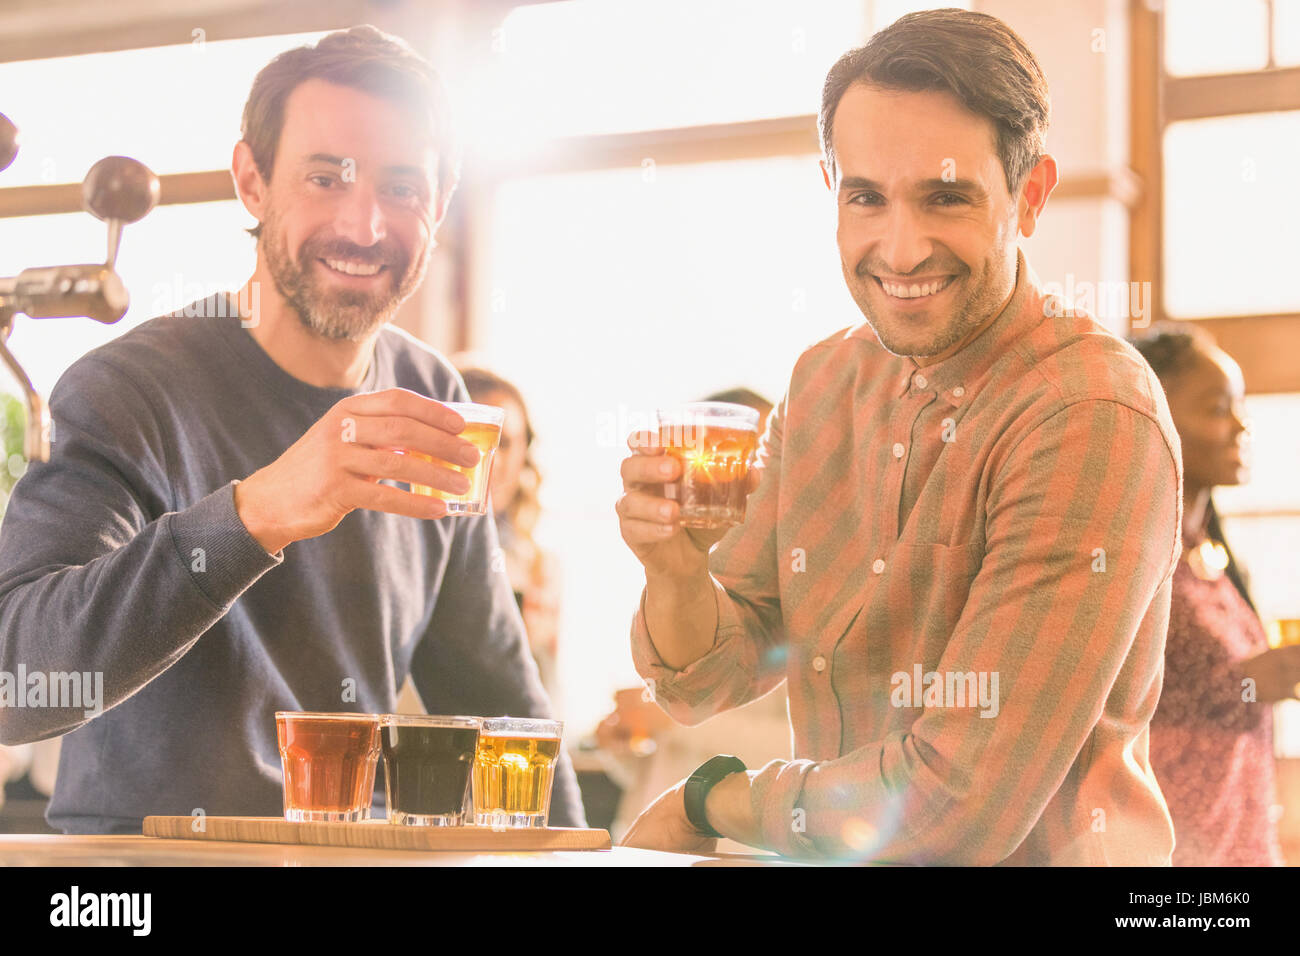 Portrait smiling men friends sampling beer at microbrewery bar Stock Photo